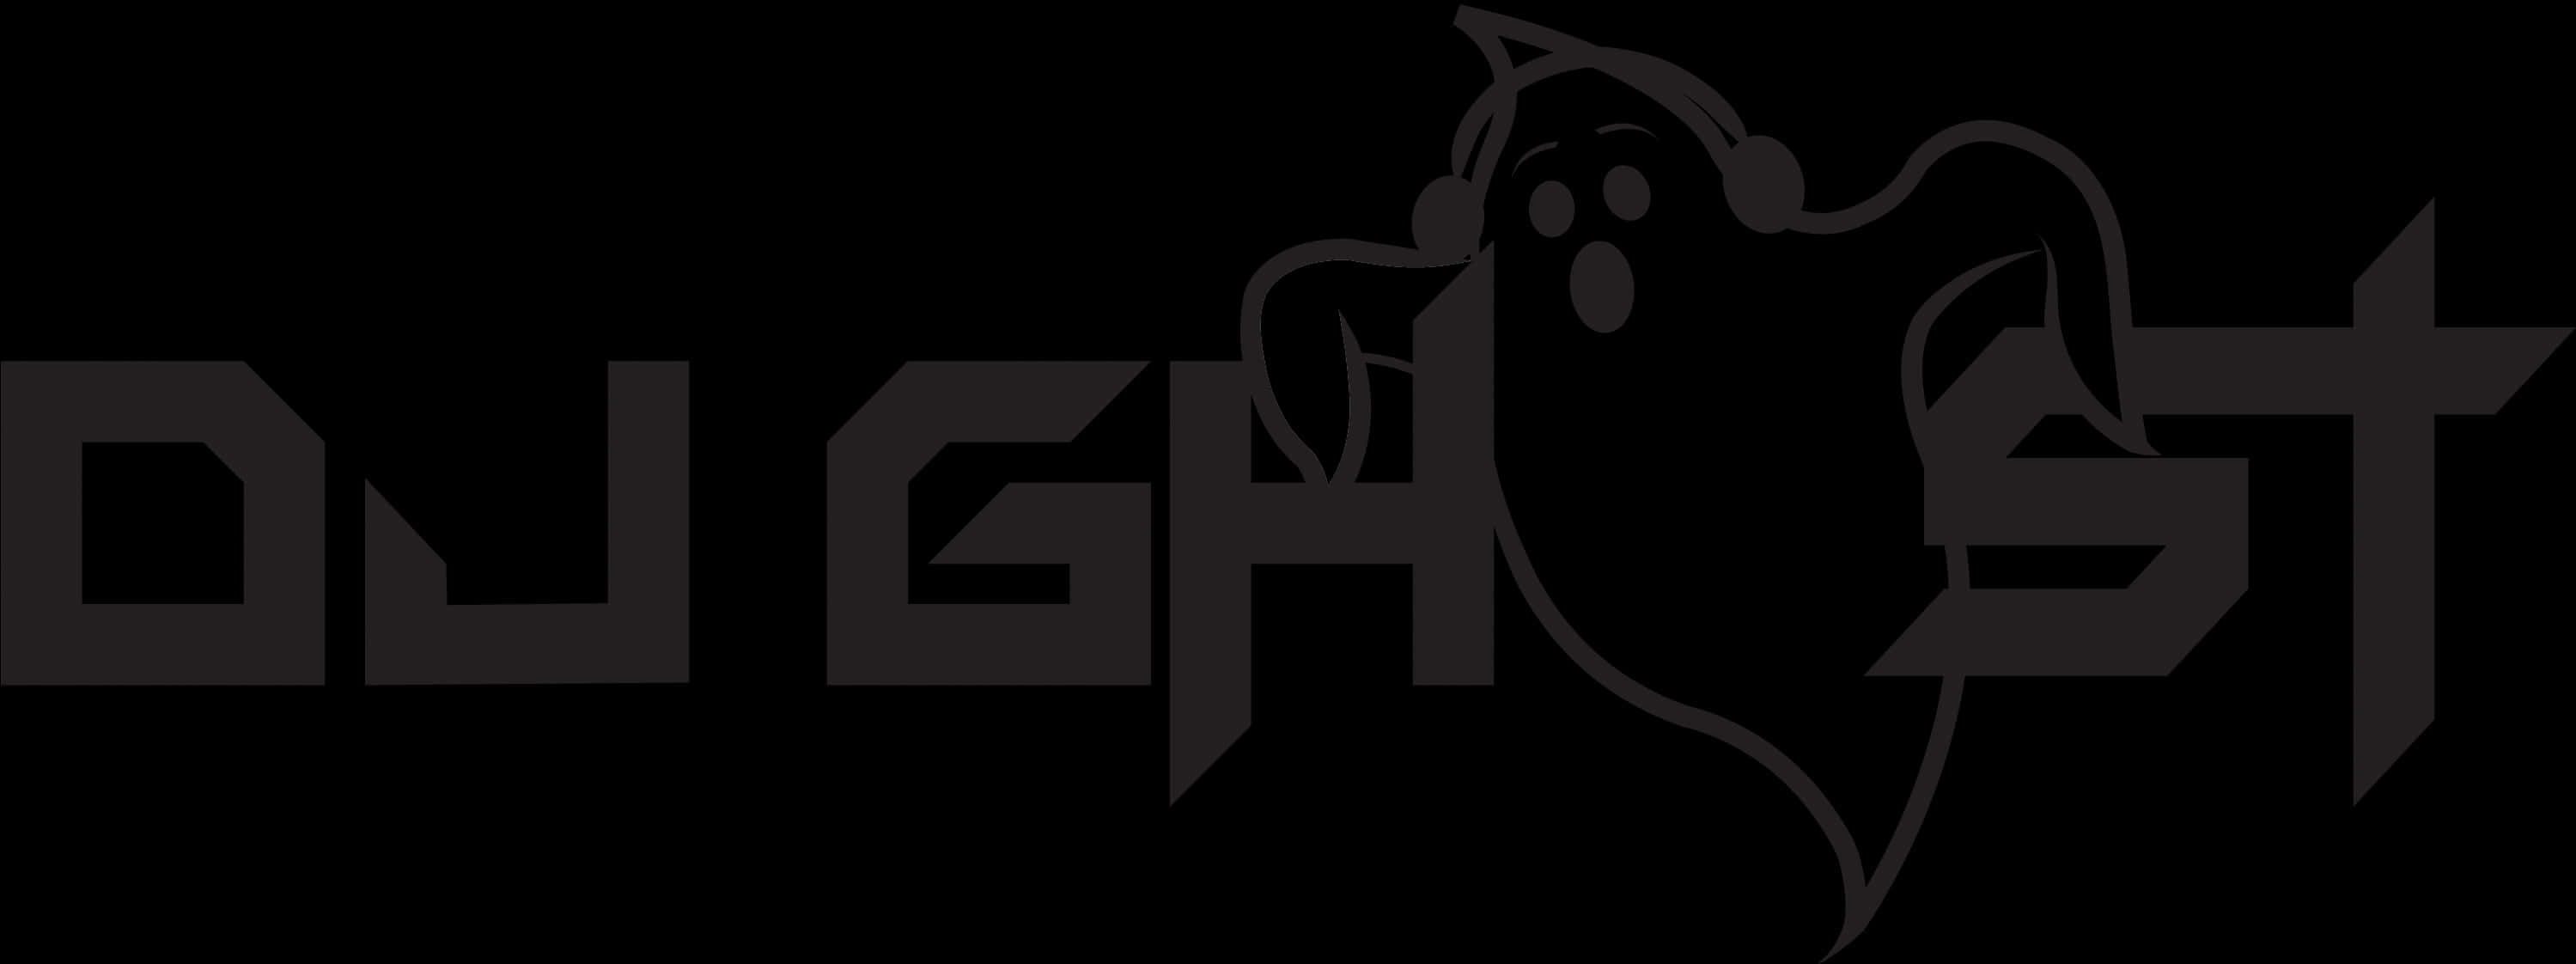 Ghost Logo Black Background